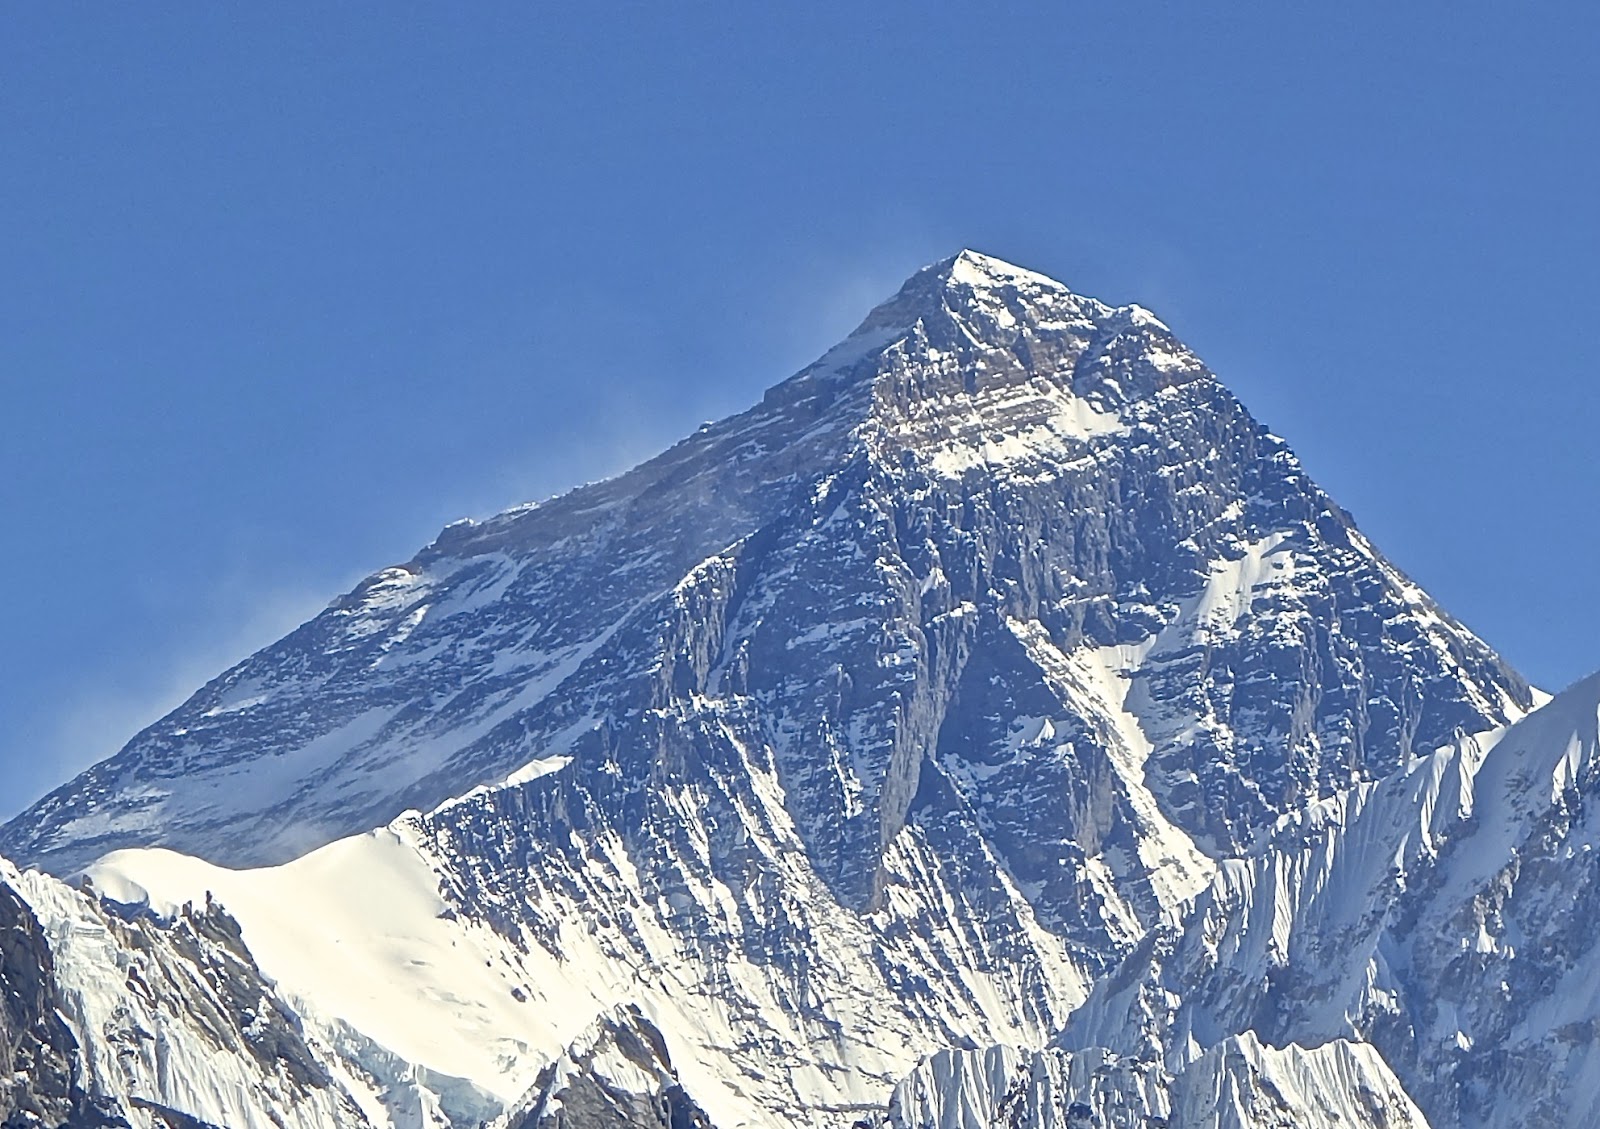 Mt._Everest_from_Gokyo_Ri_November_5,_2012_Cropped.jpg